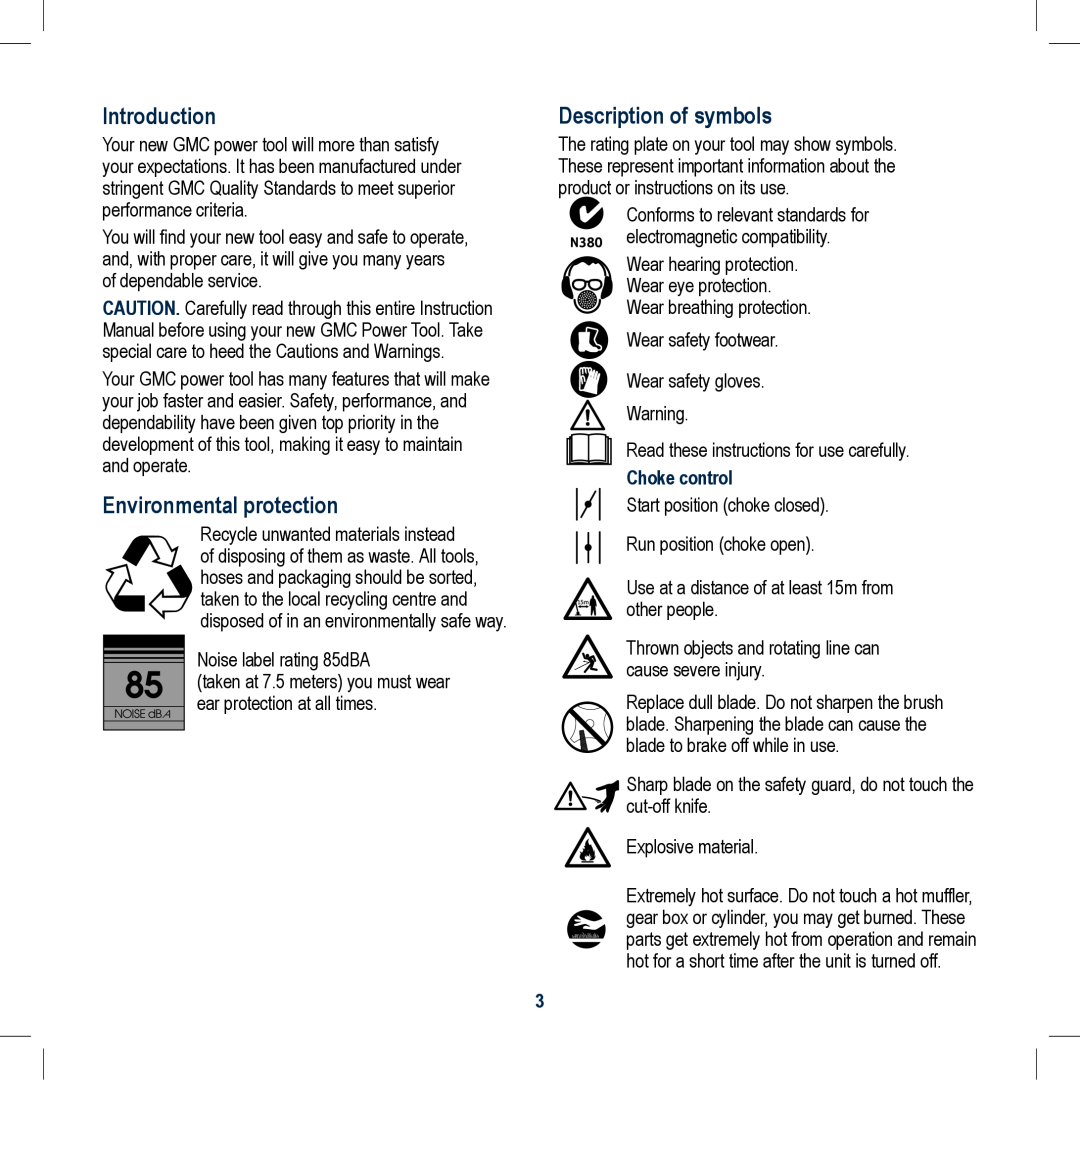 Global Machinery Company 25CC Introduction, Environmental protection, Description of symbols, Choke control 